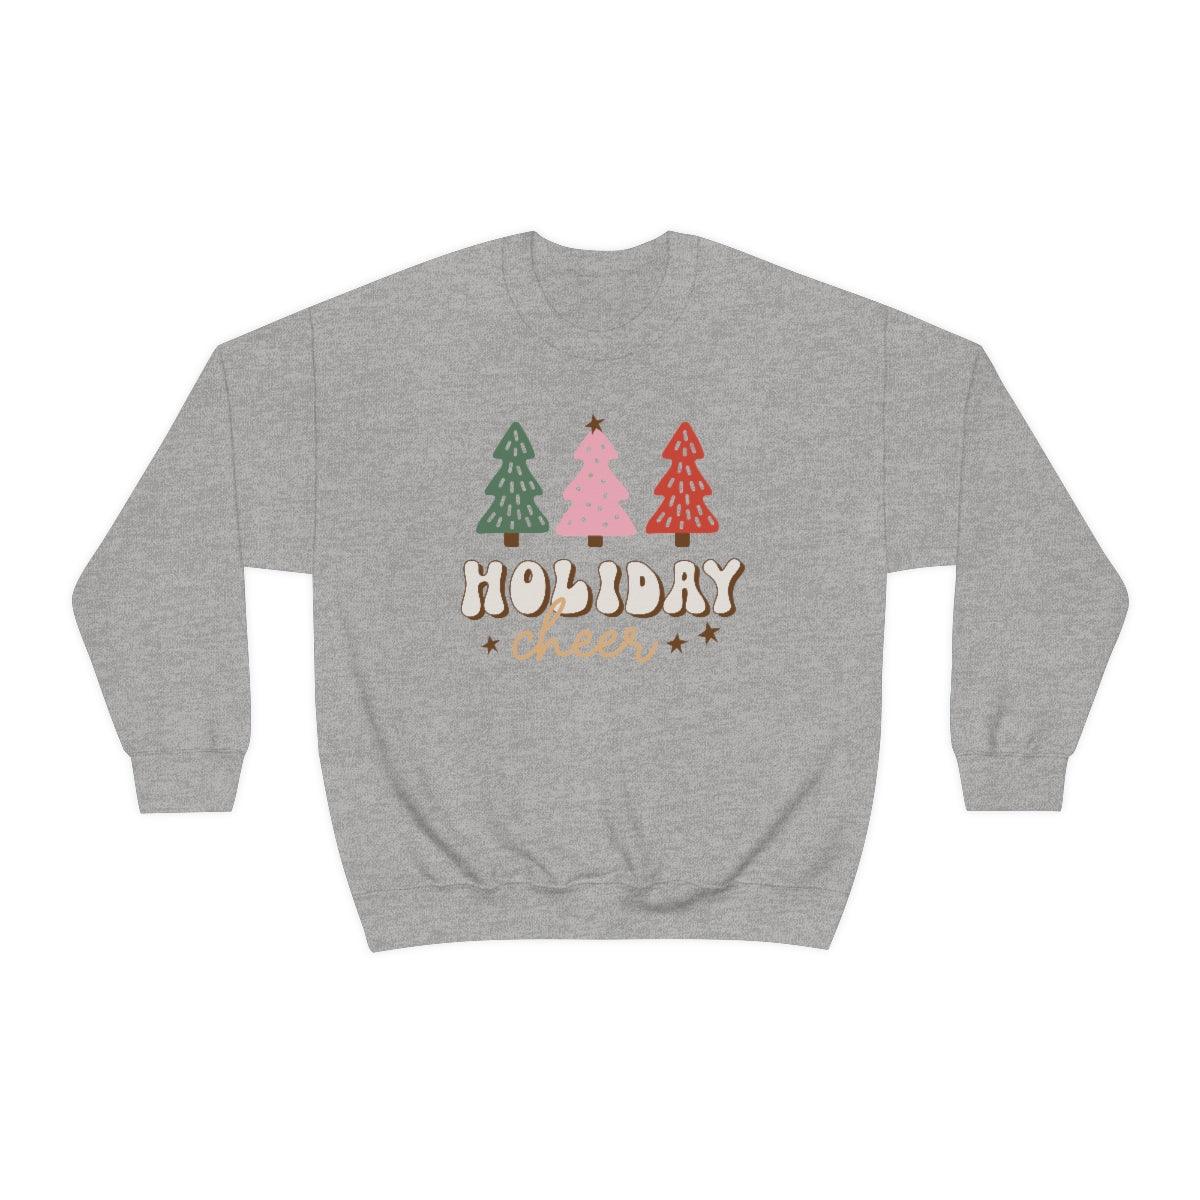 Retro Holiday Cheer Trees Christmas Crewneck Sweater